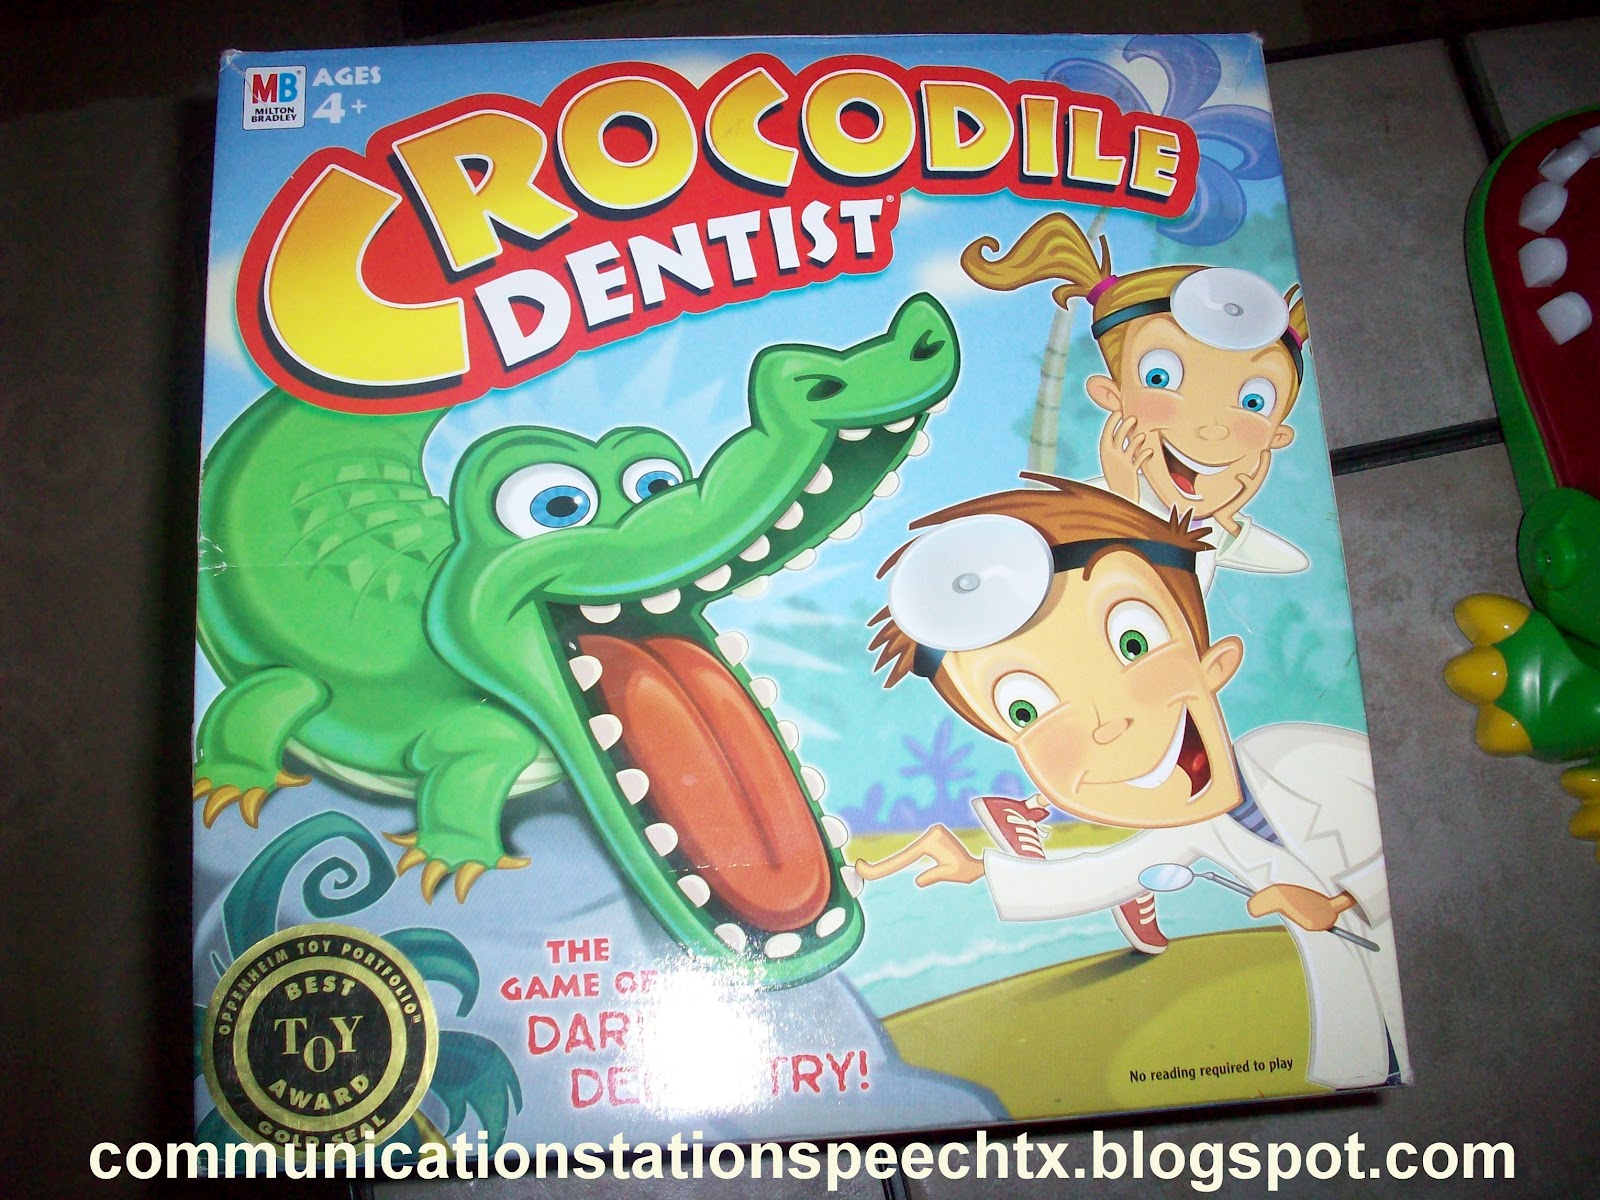 Review: Crocodile Dentist! - Communication Station:Communication Station